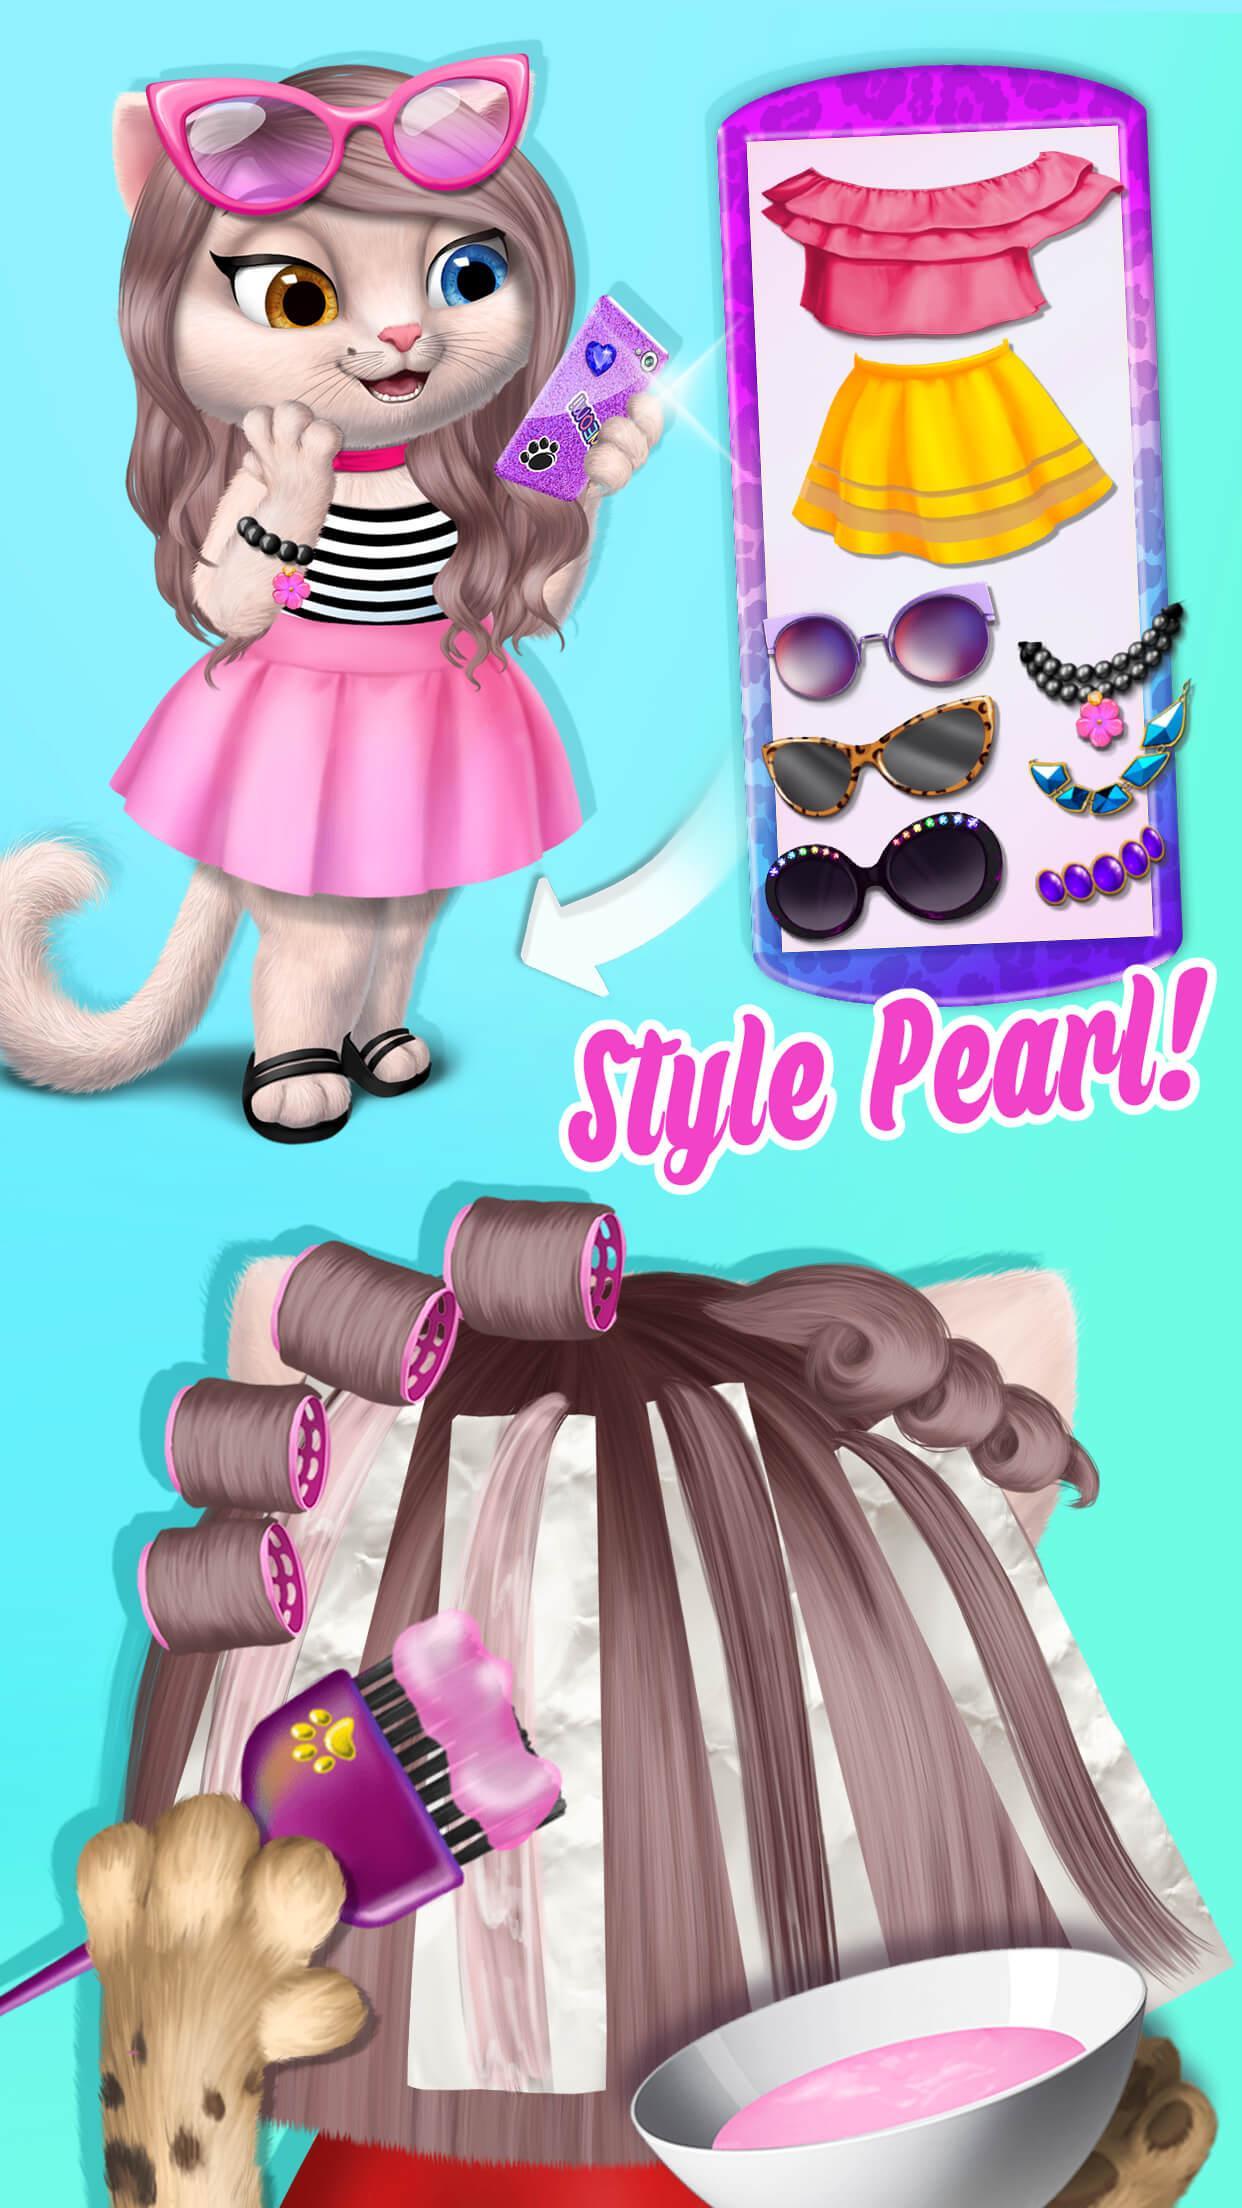 Amy's Animal Hair Salon - Cat Fashion & Hairstyles 4.0.50002 Screenshot 7